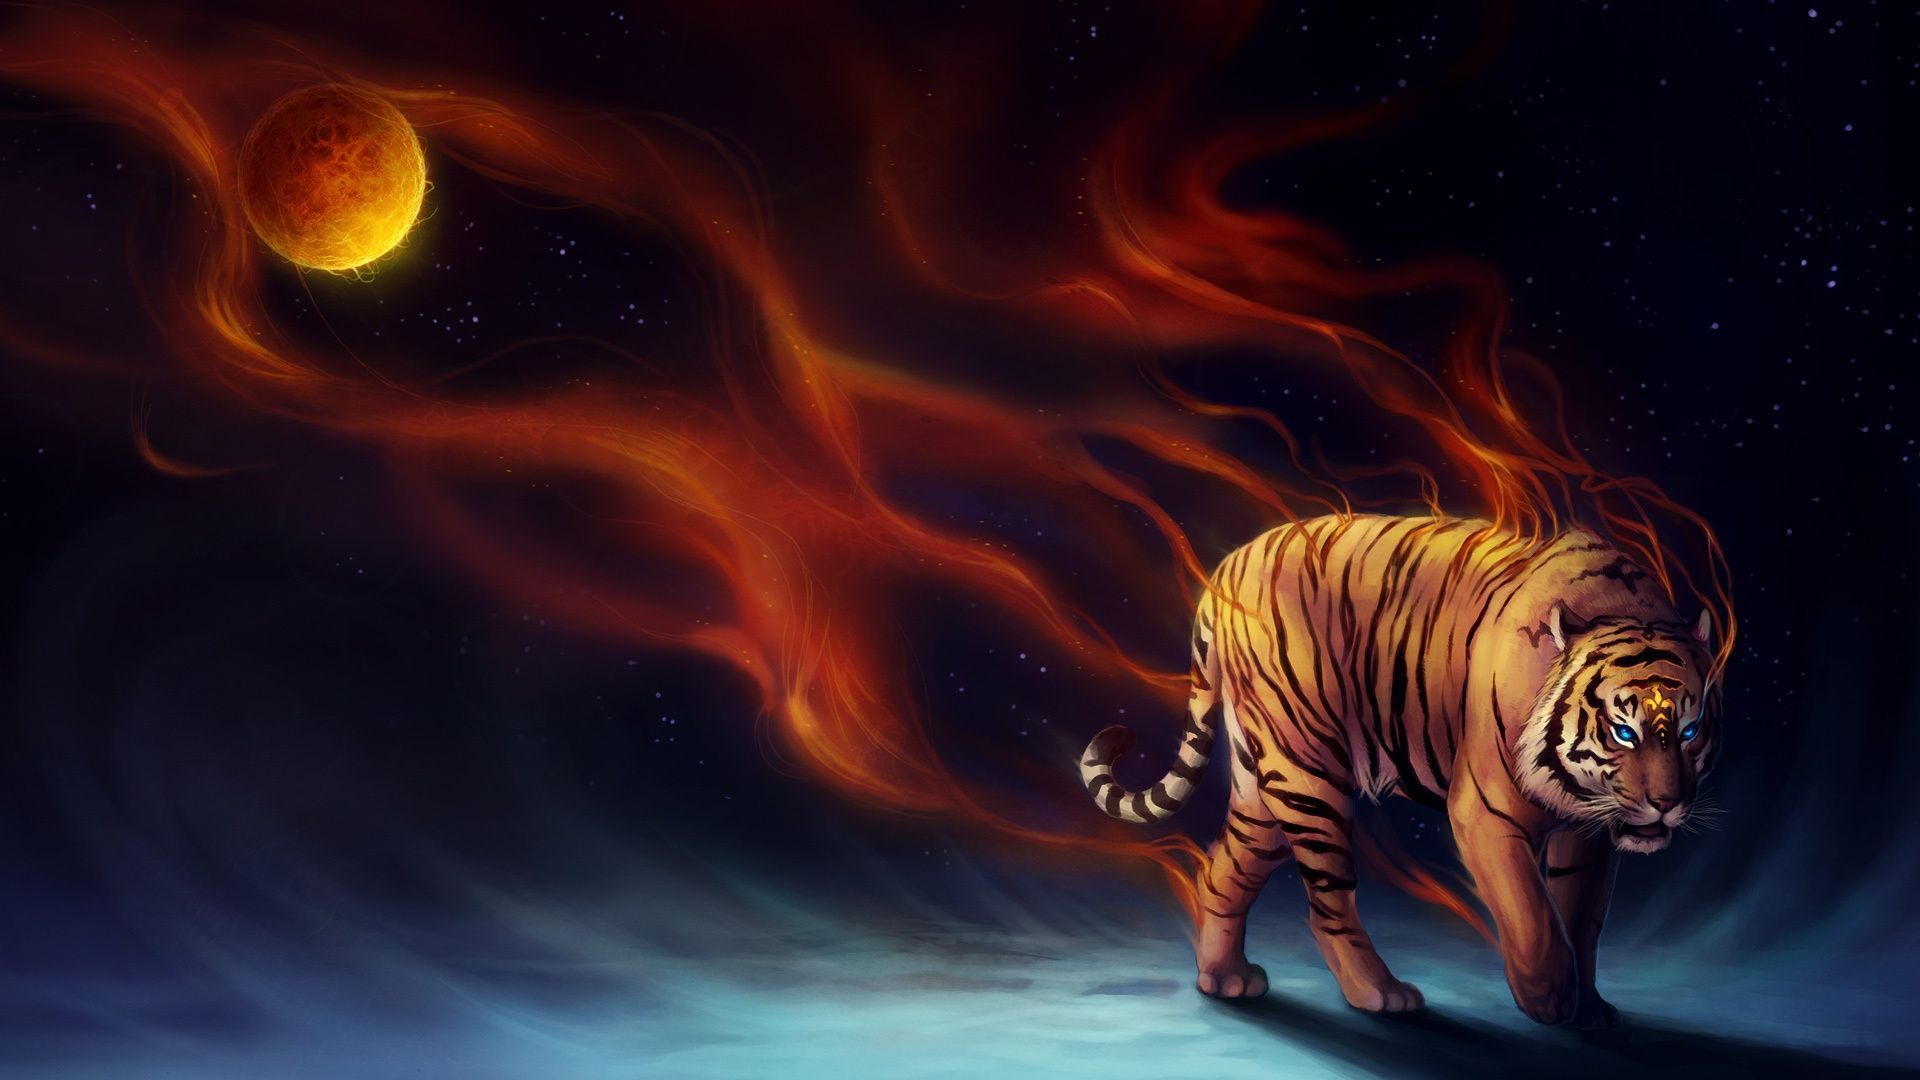 Flaming Tiger HD Wallpaper | Download HD Wallpapers